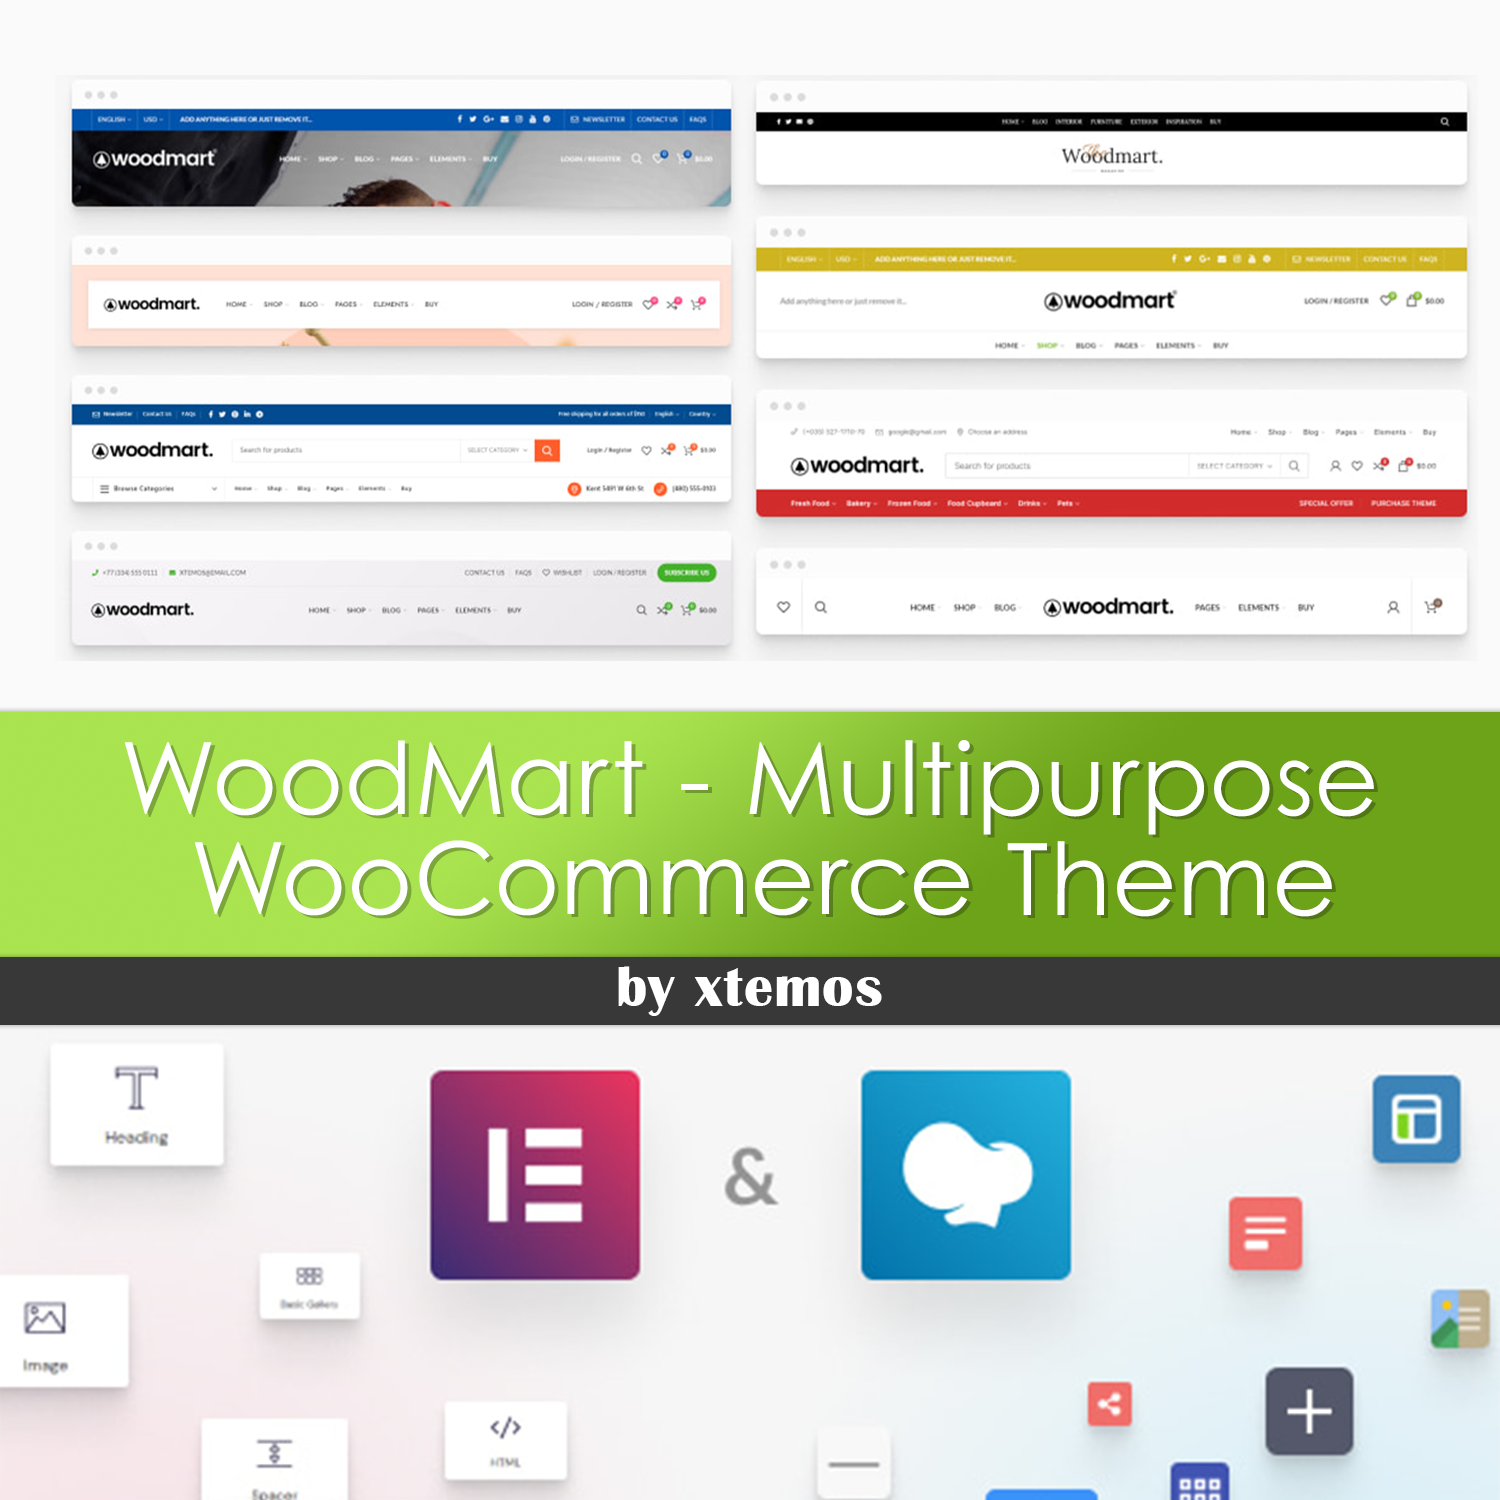 Images with woodmart multipurpose woocommerce theme.